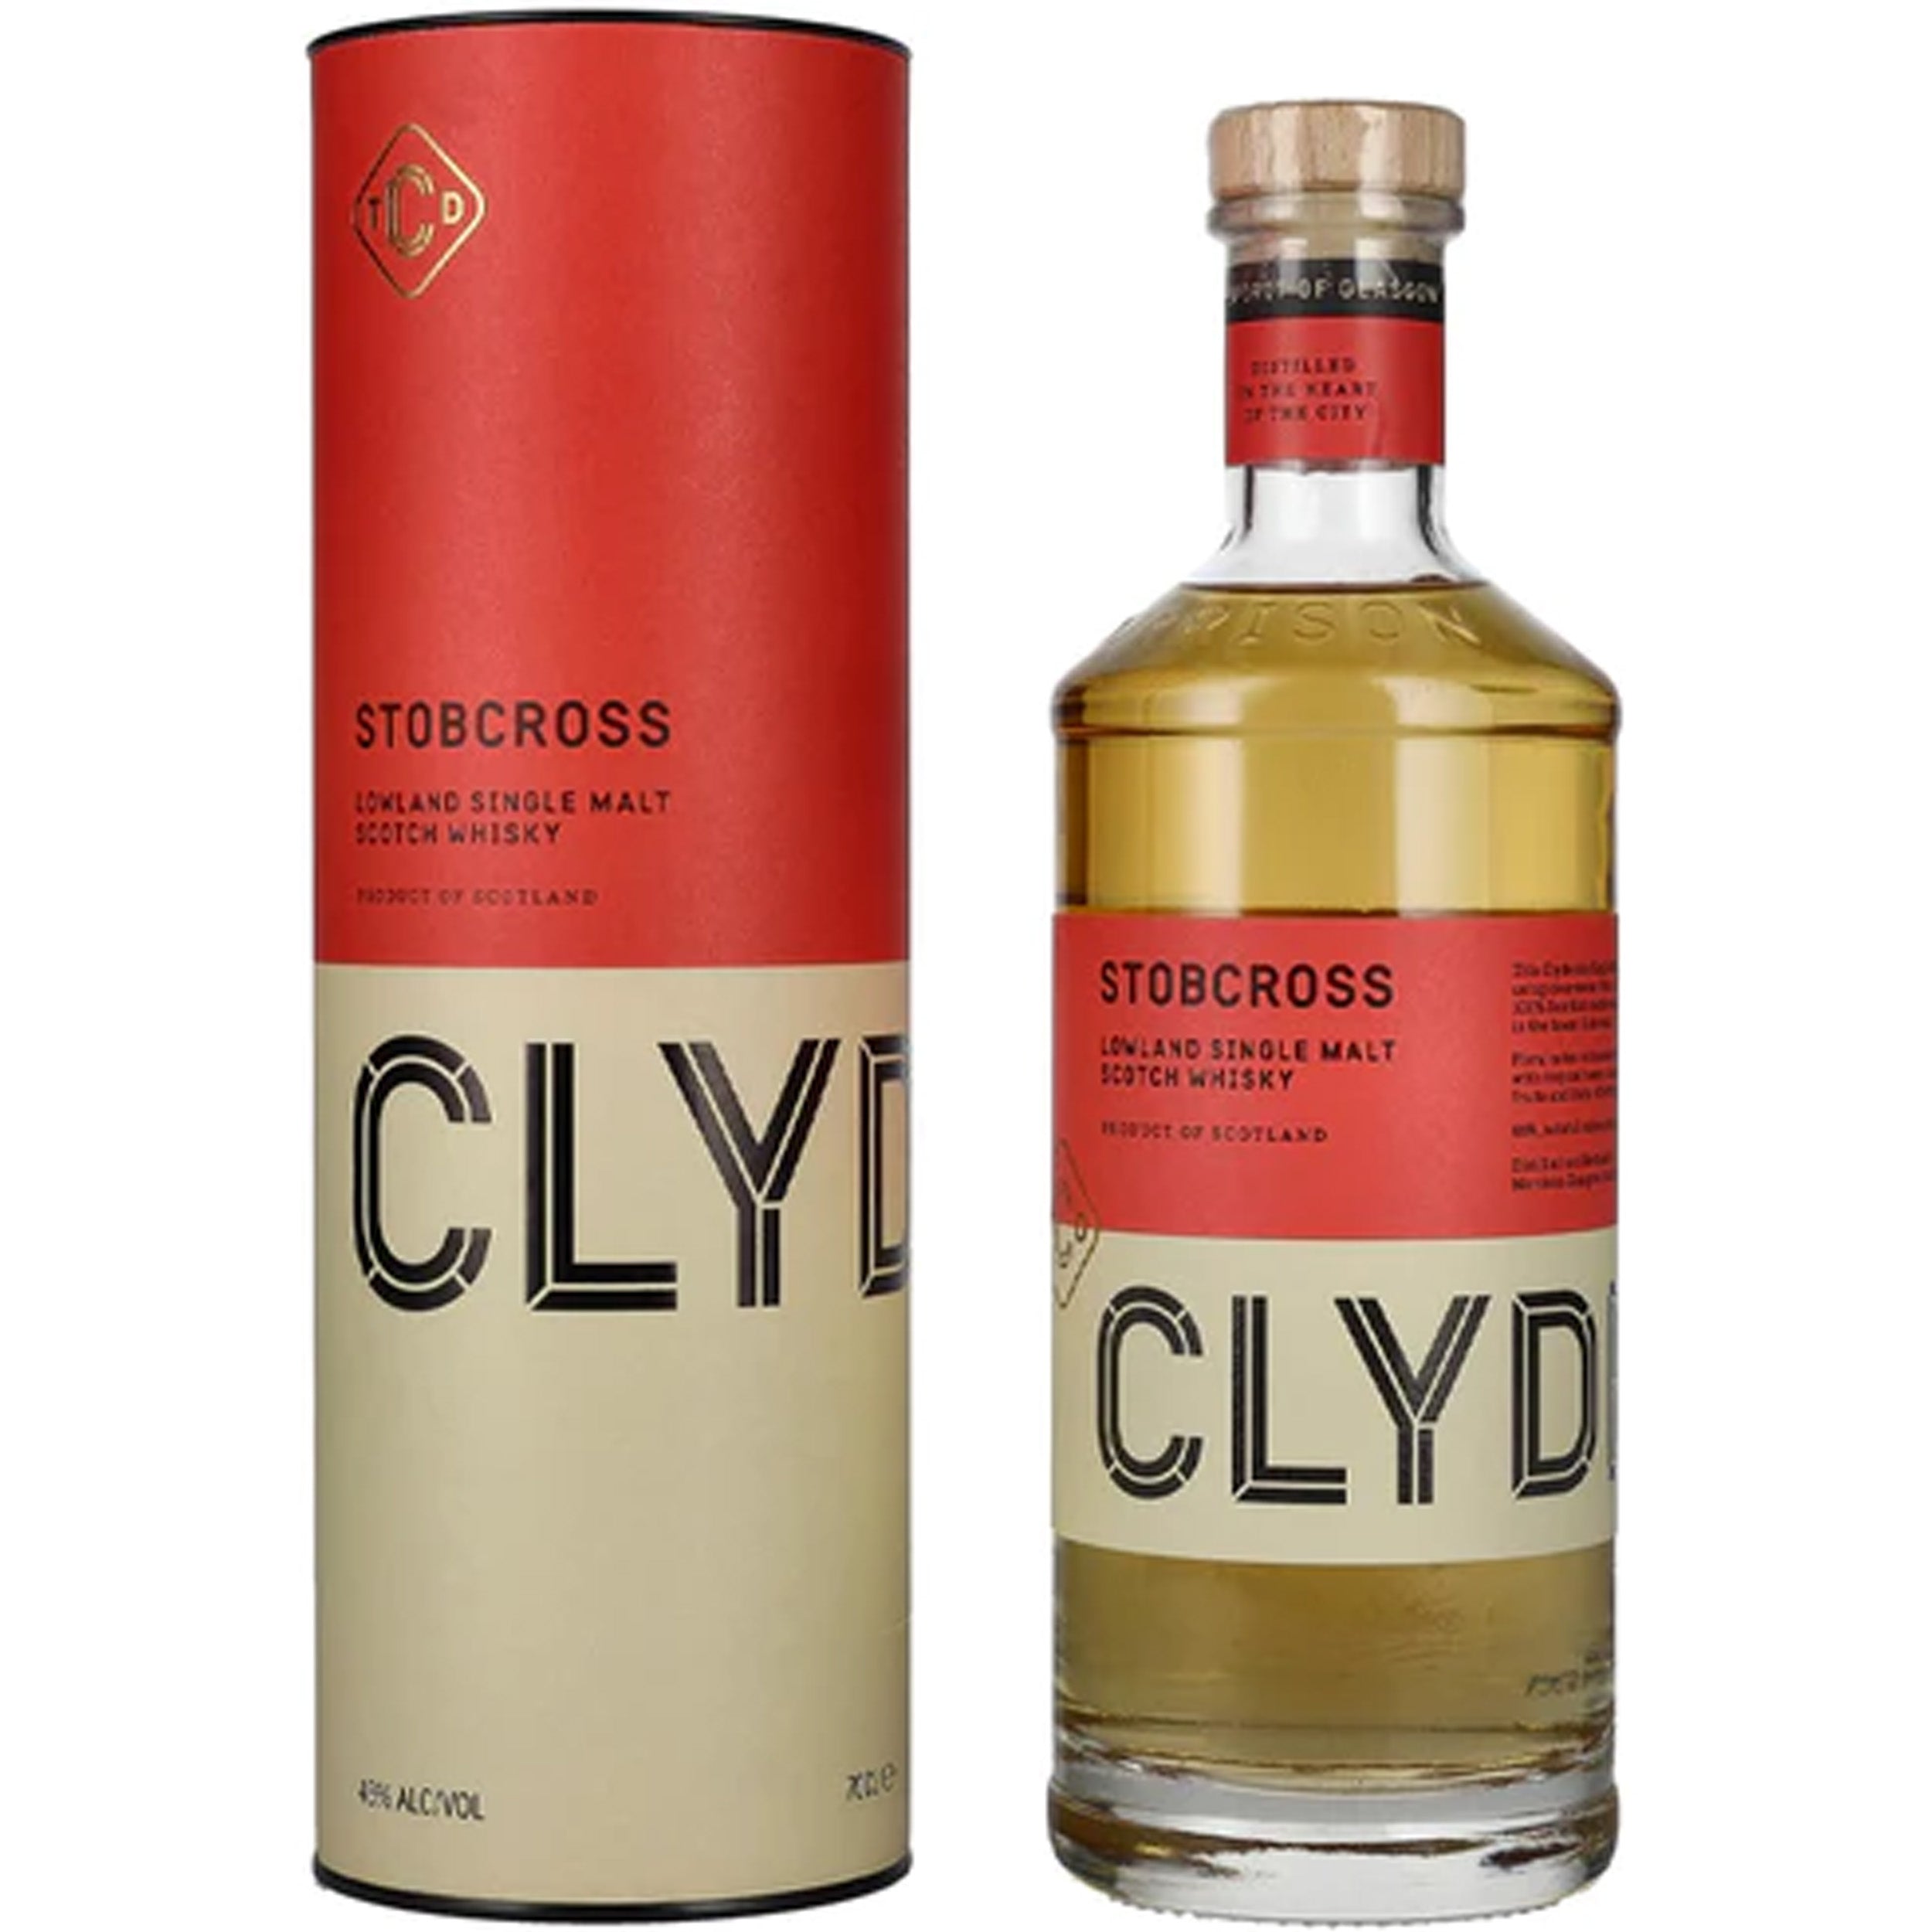 Clydeside Stobcross Scotch Whisky